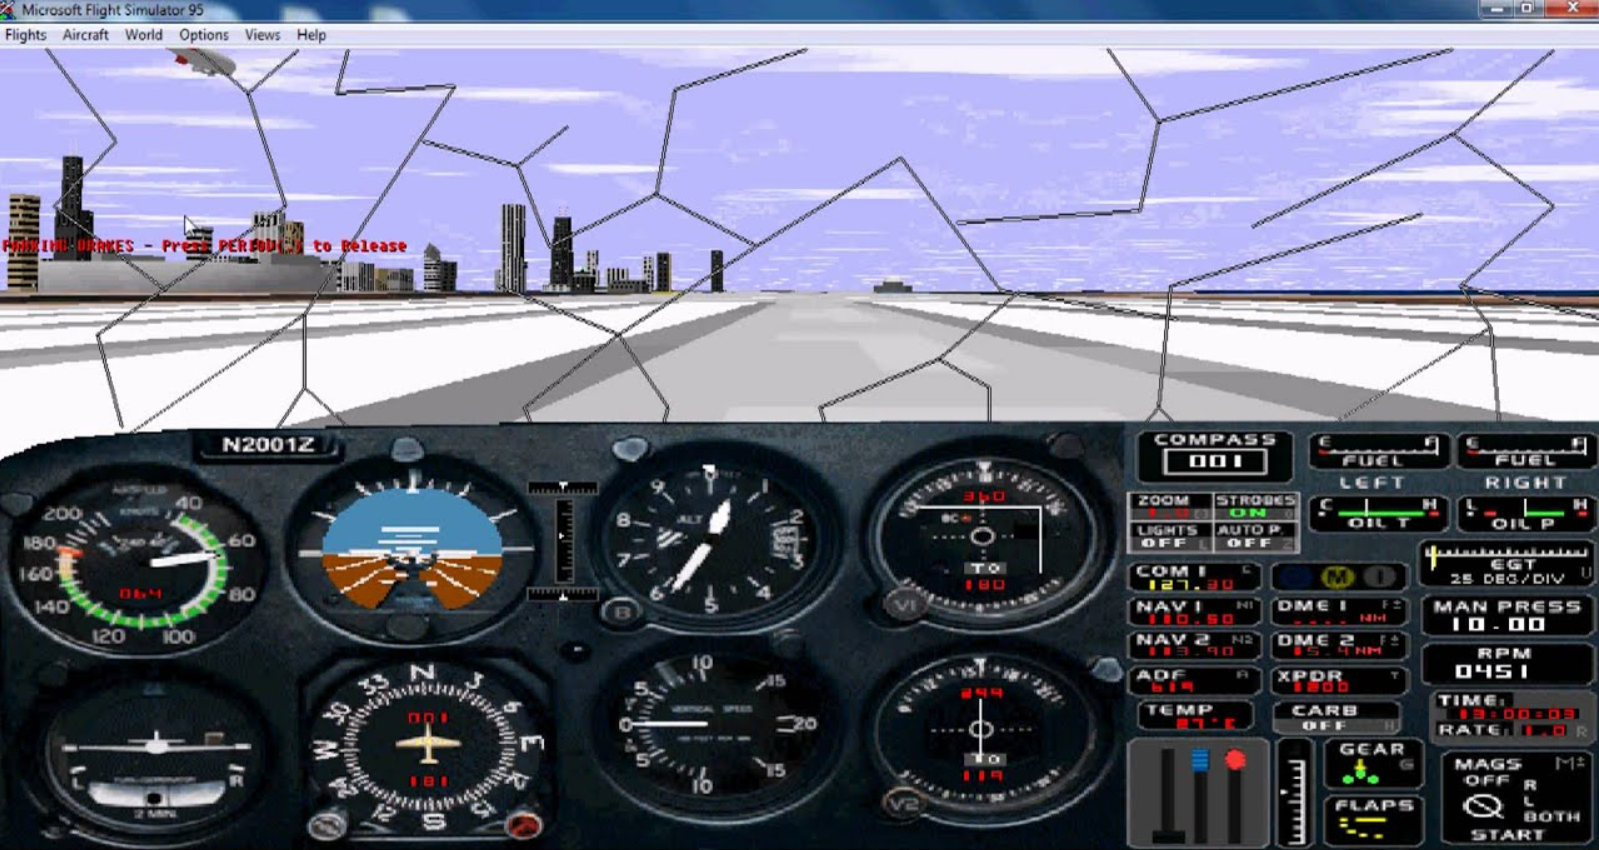 Microsoft Flight Simulator 2001. Microsoft Flight Simulator 95. Microsoft Flight Simulator for Windows 95. Microsoft Flight Simulator 1990.